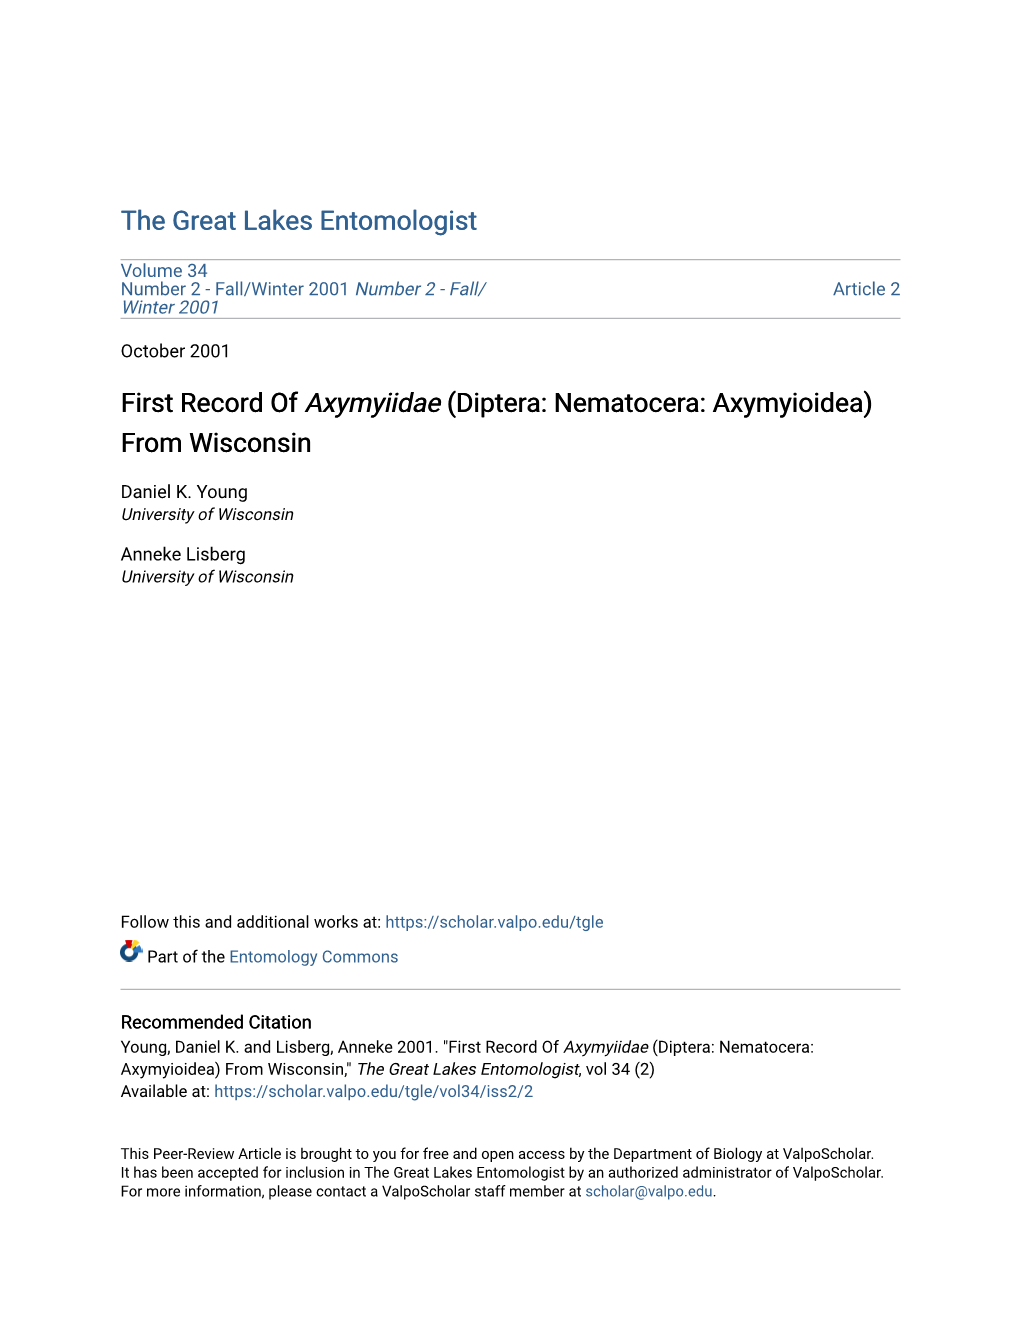 First Record of Axymyiidae (Diptera: Nematocera: Axymyioidea) from Wisconsin